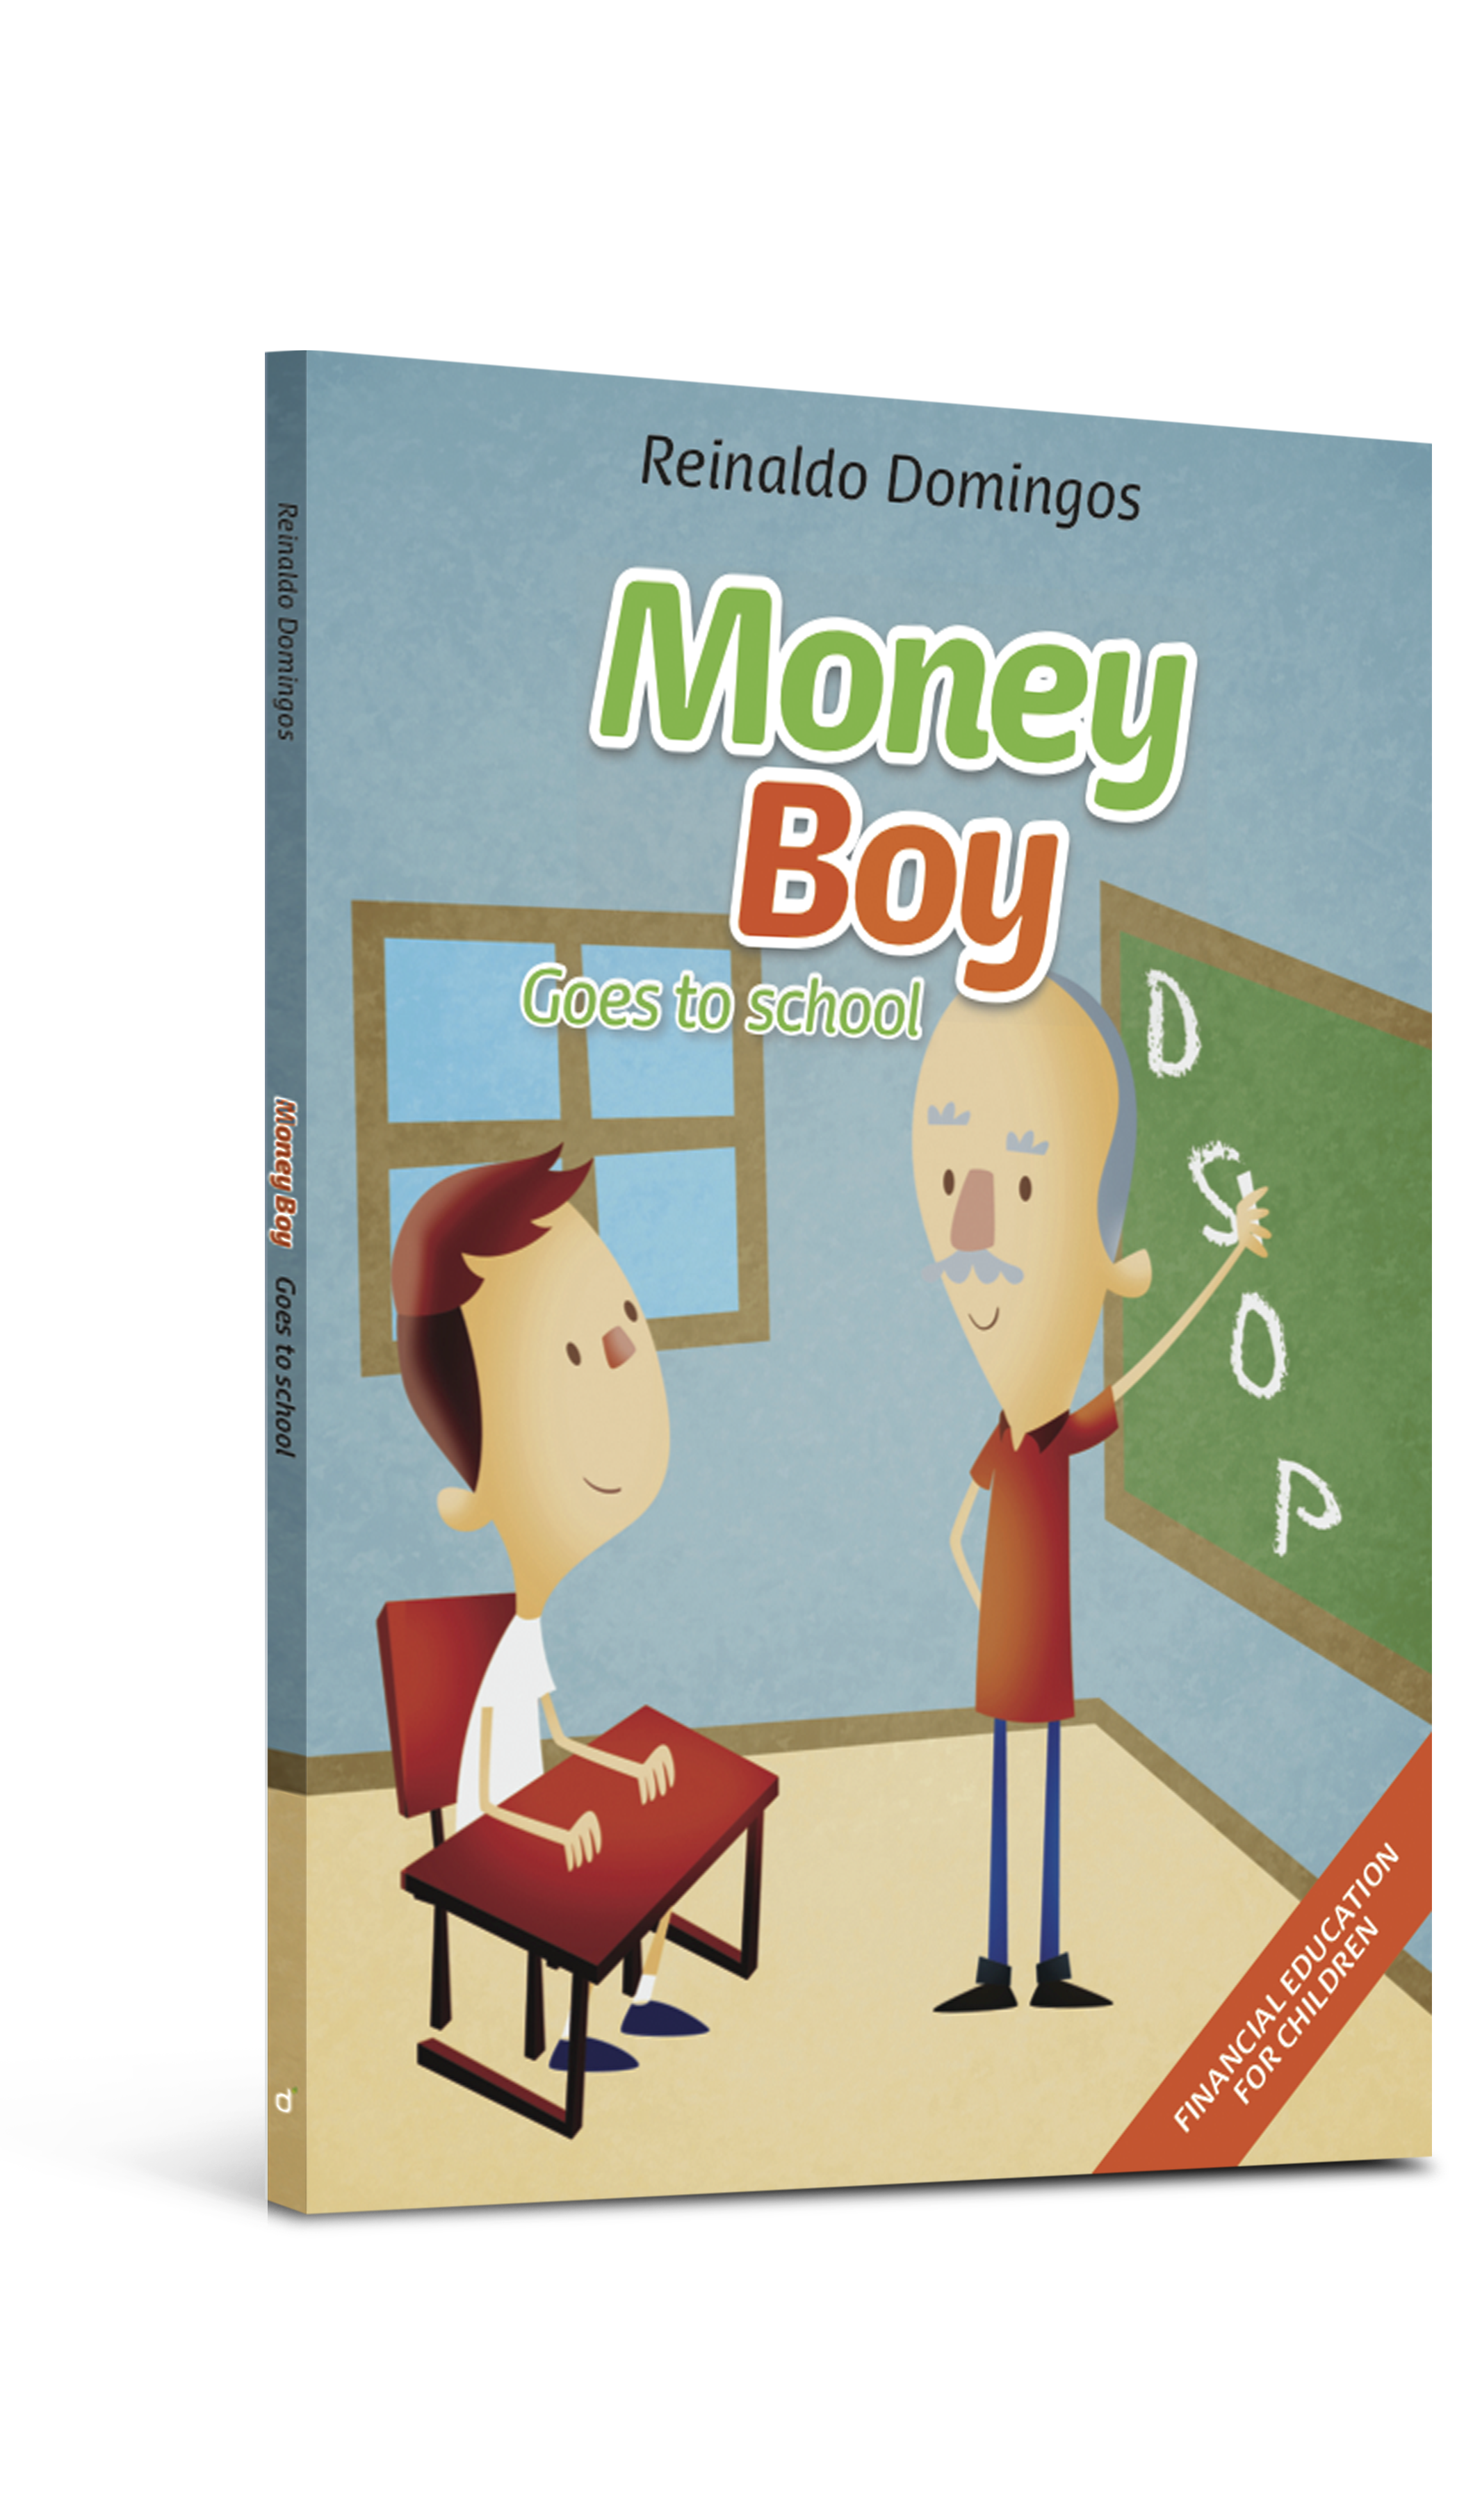 The money boy – Goes to school